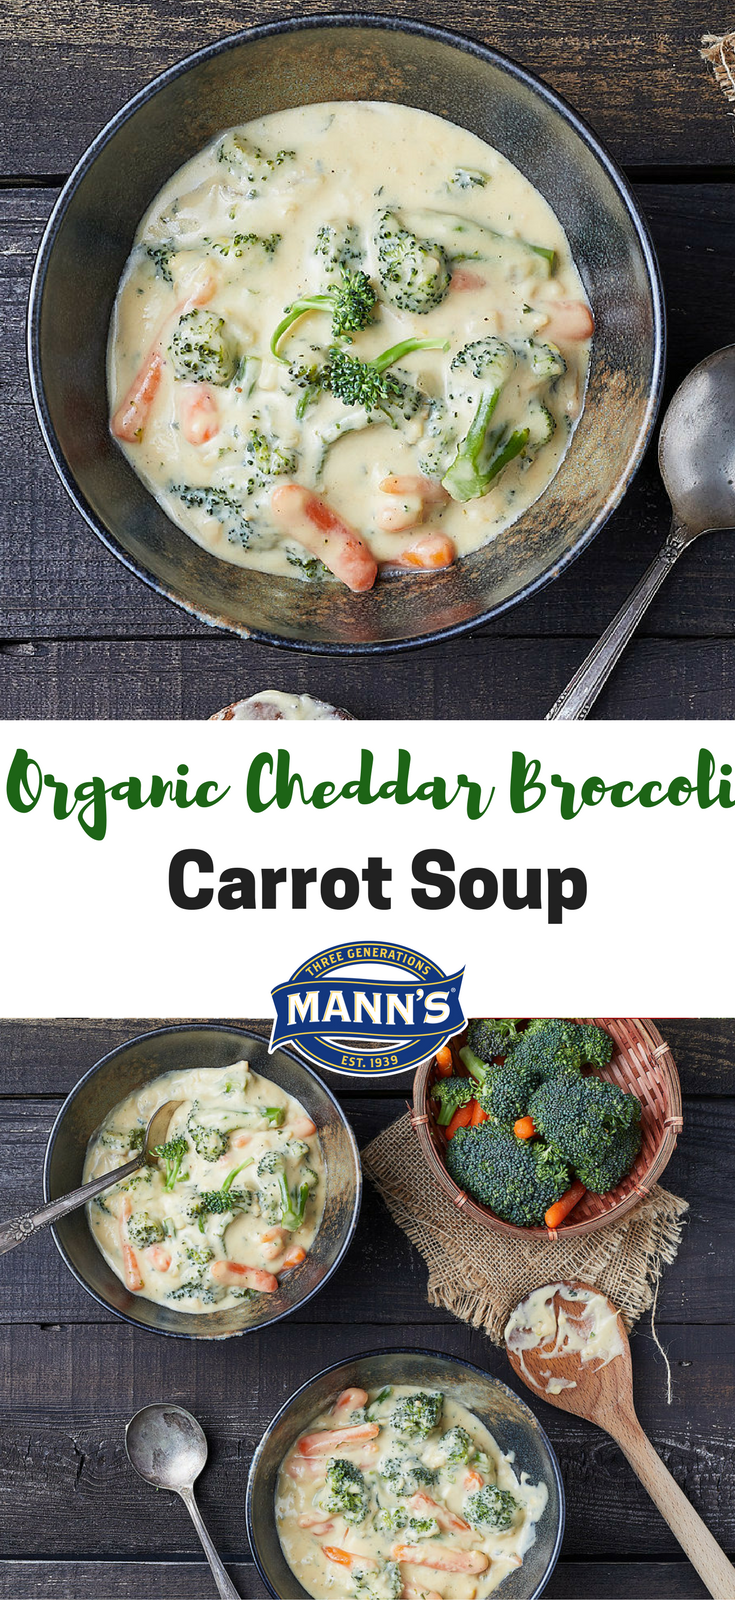 Organic Cheddar Broccoli and Carrot Soup | Mann's Fresh Vegetables